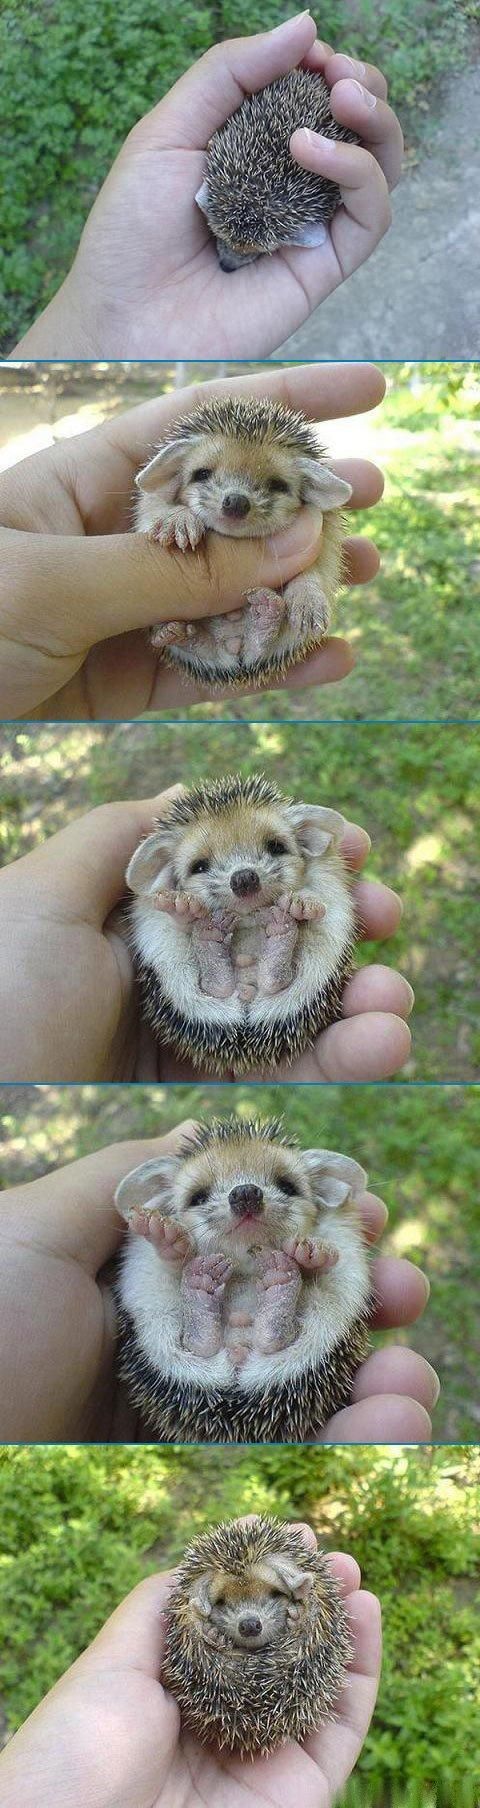 Hedgehog :)